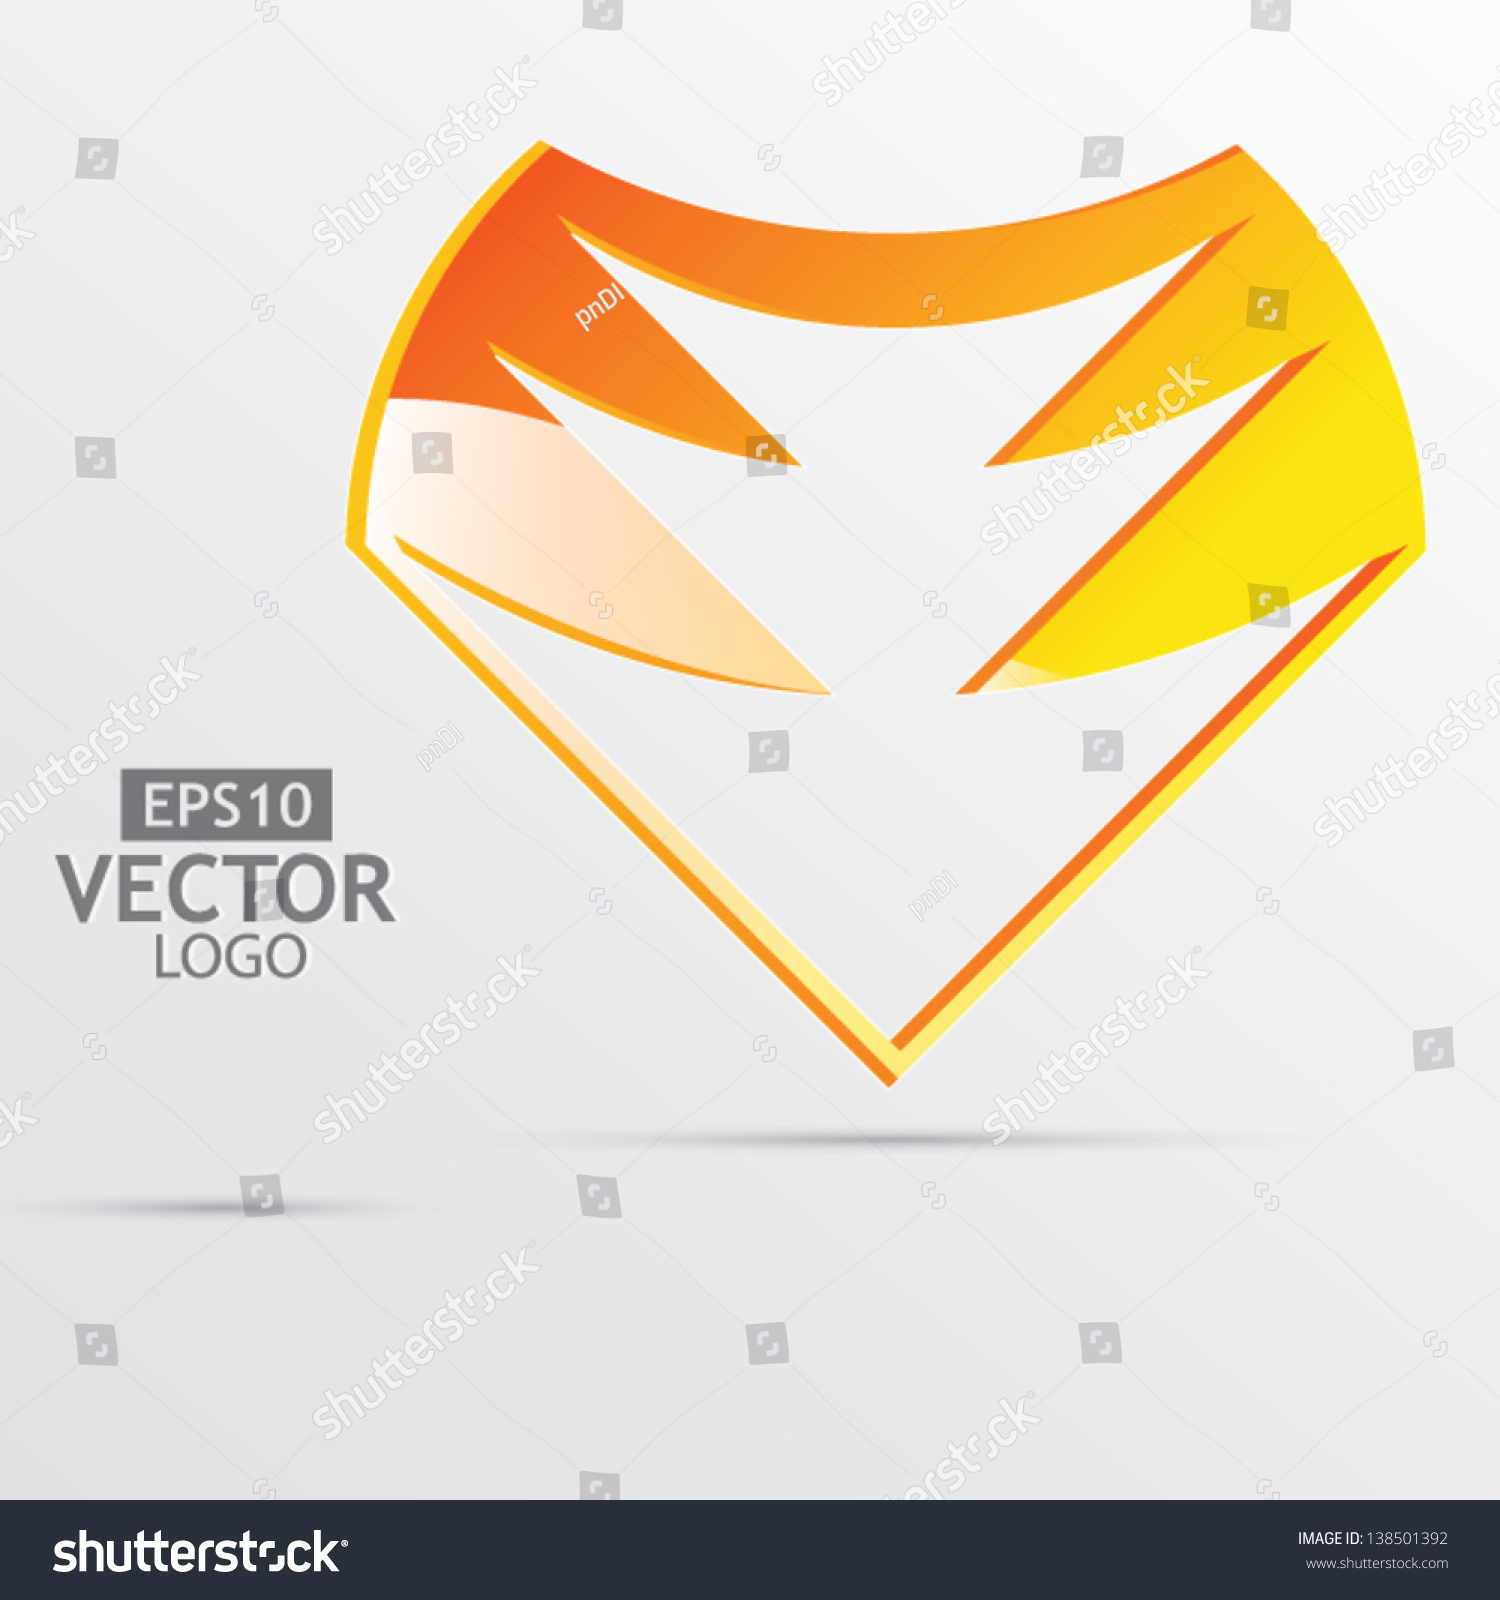 Edit Vectors Free Online - Abstract logo | Shutterstock Editor